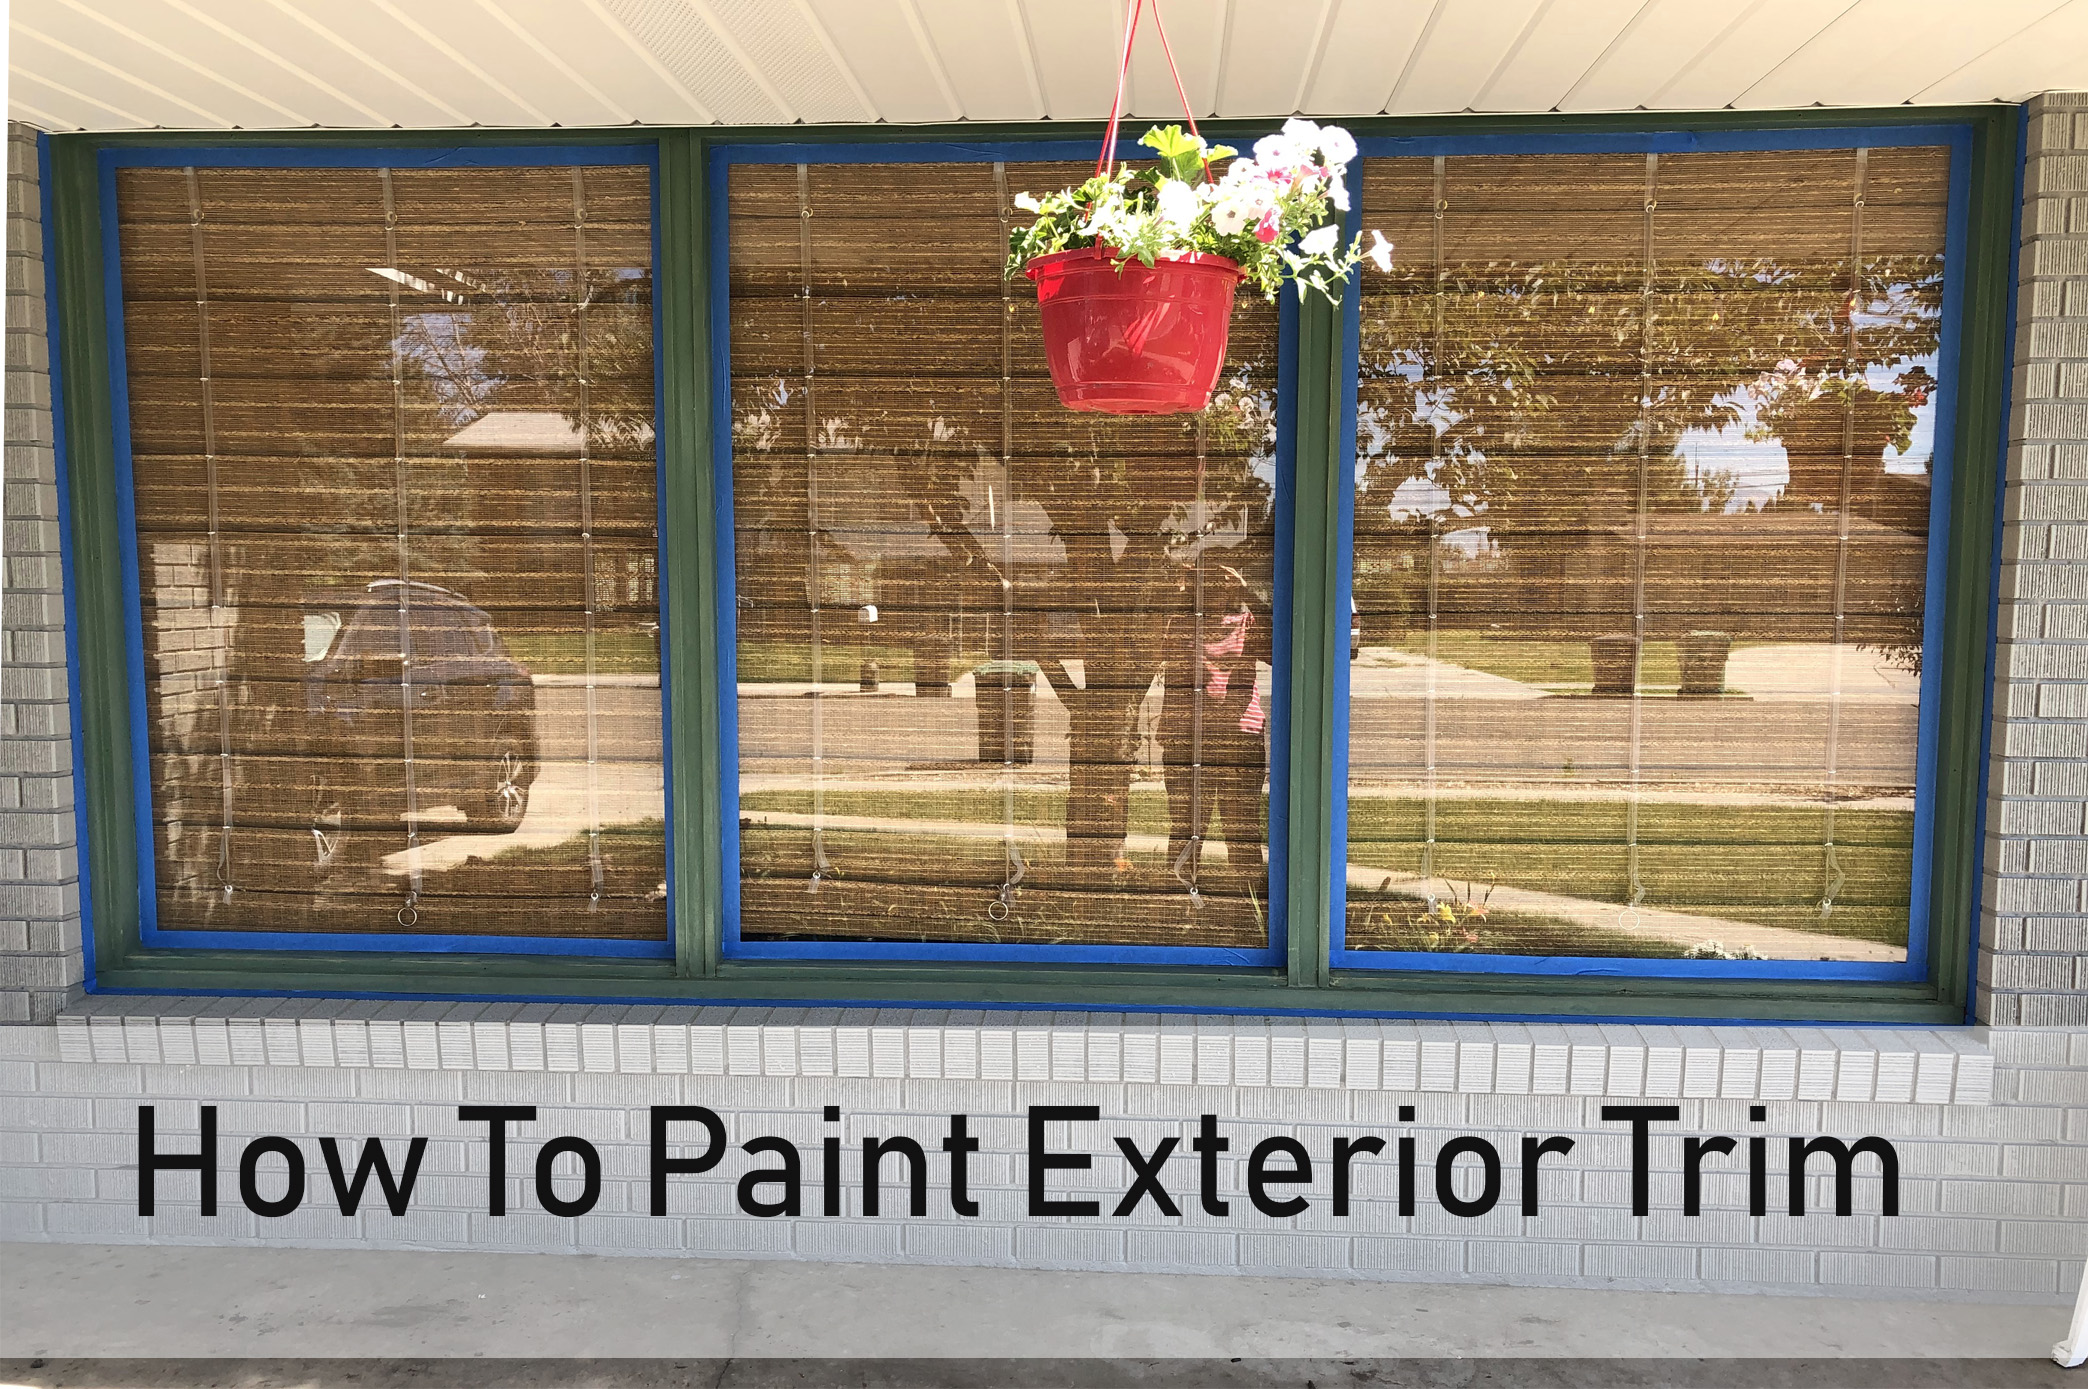 How to Paint Exterior Trim